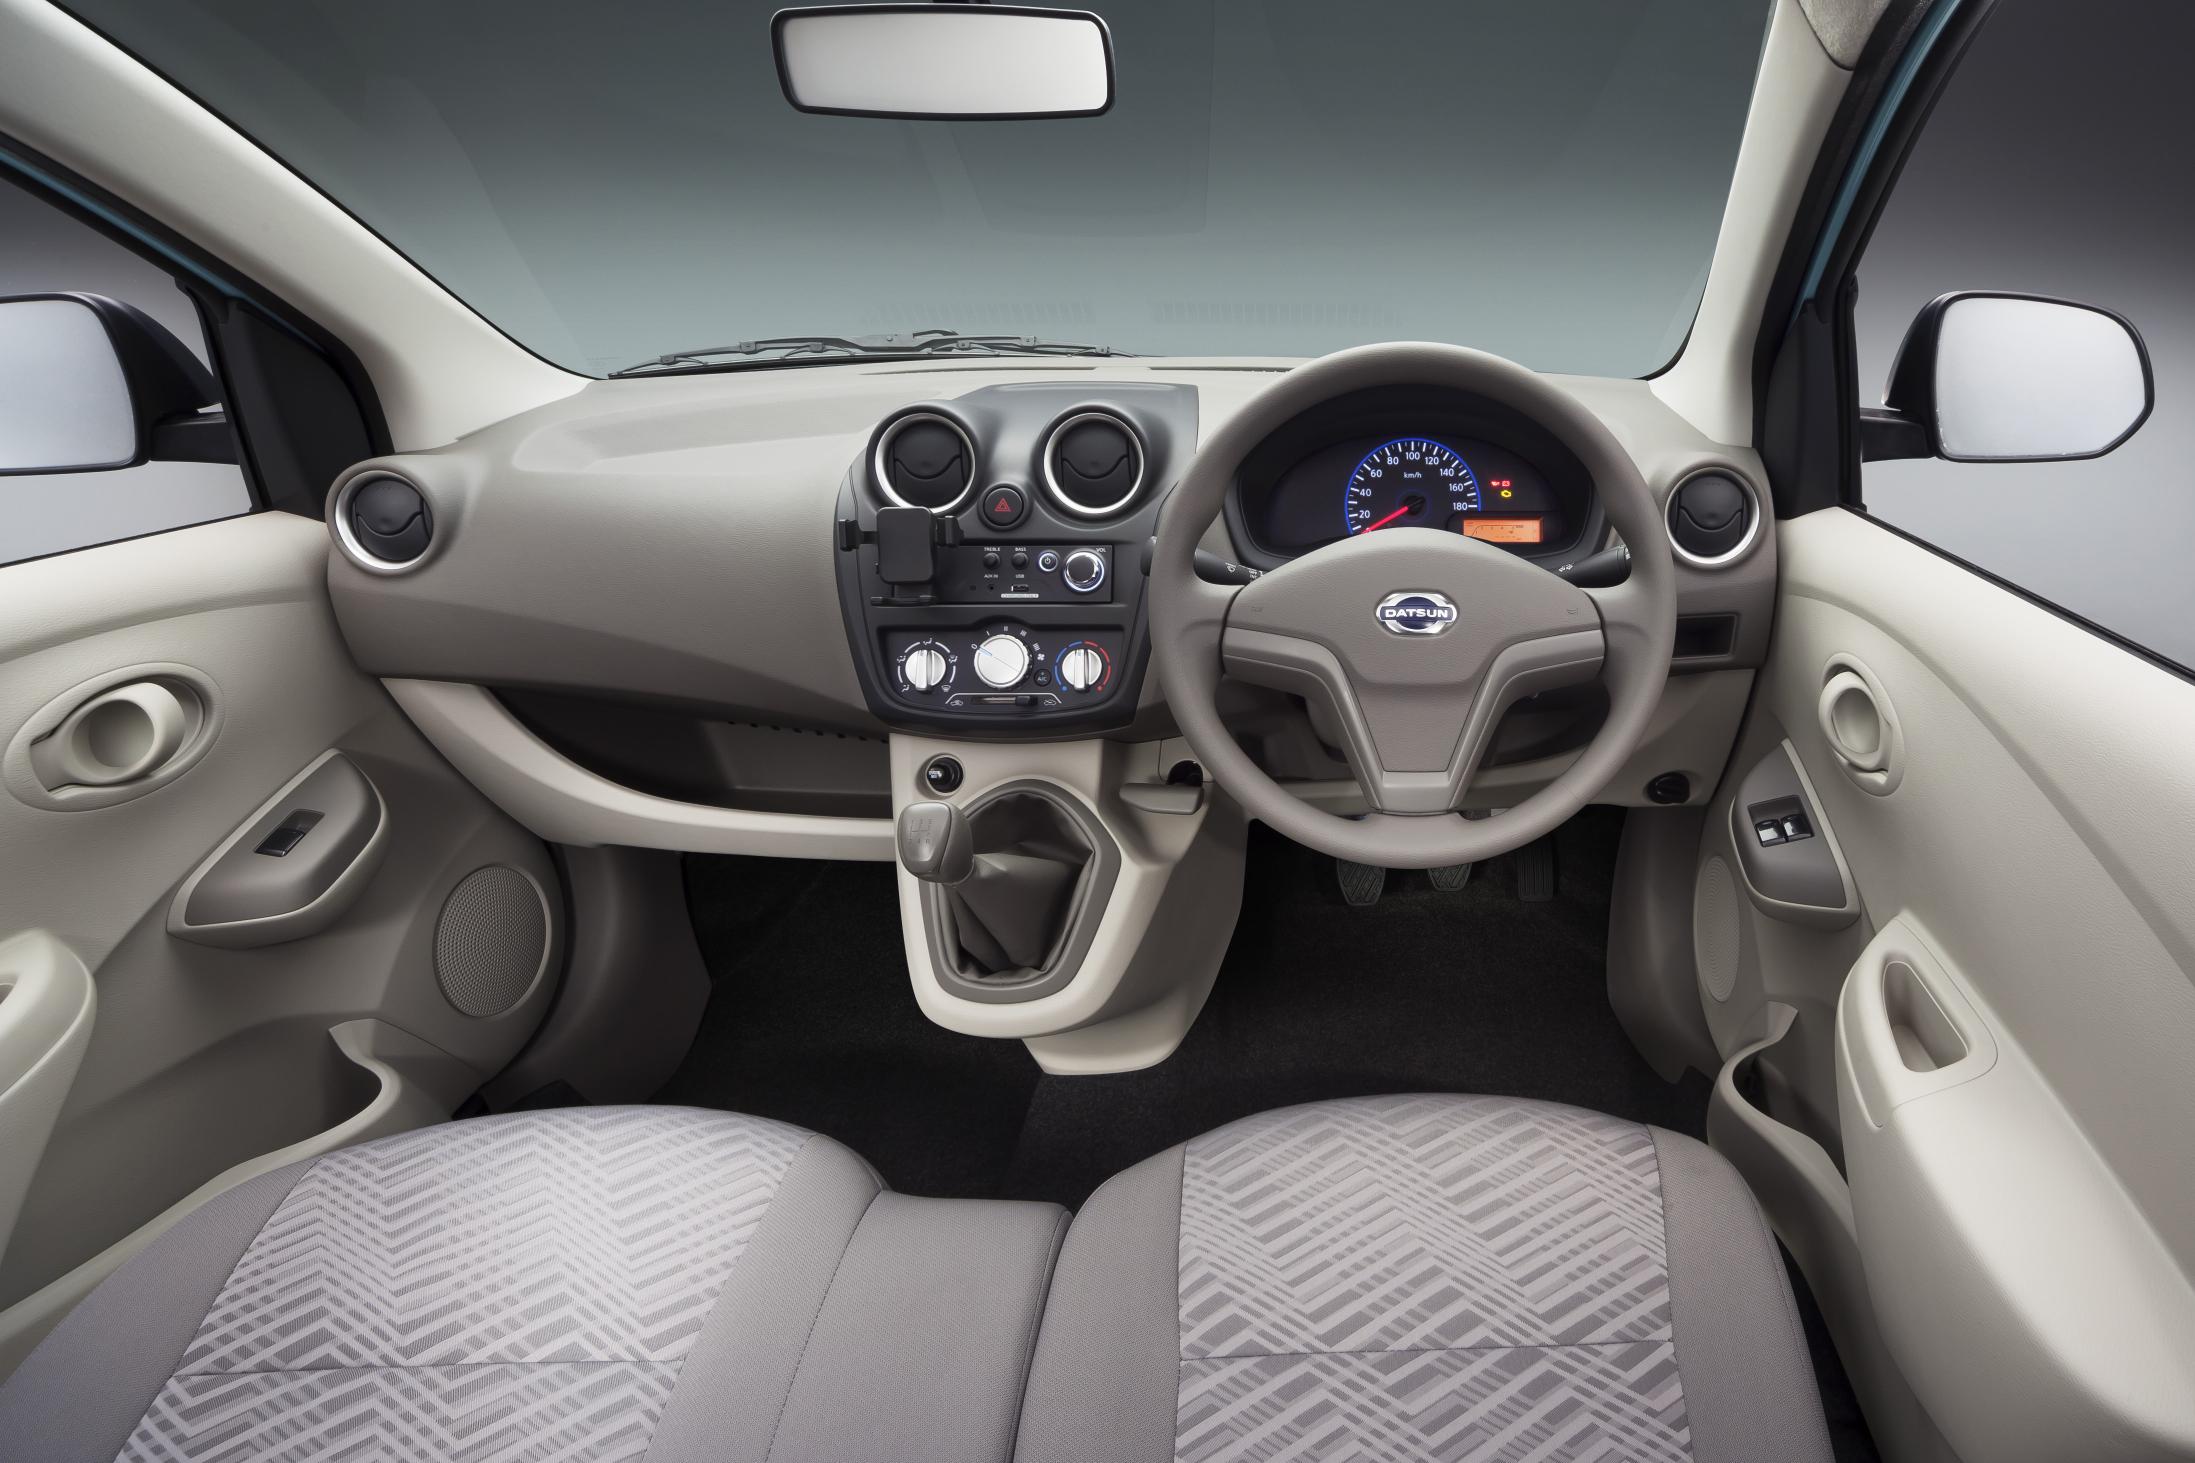  Nissan  Datsun  Go  Plus India Interior  Dashboard Images 